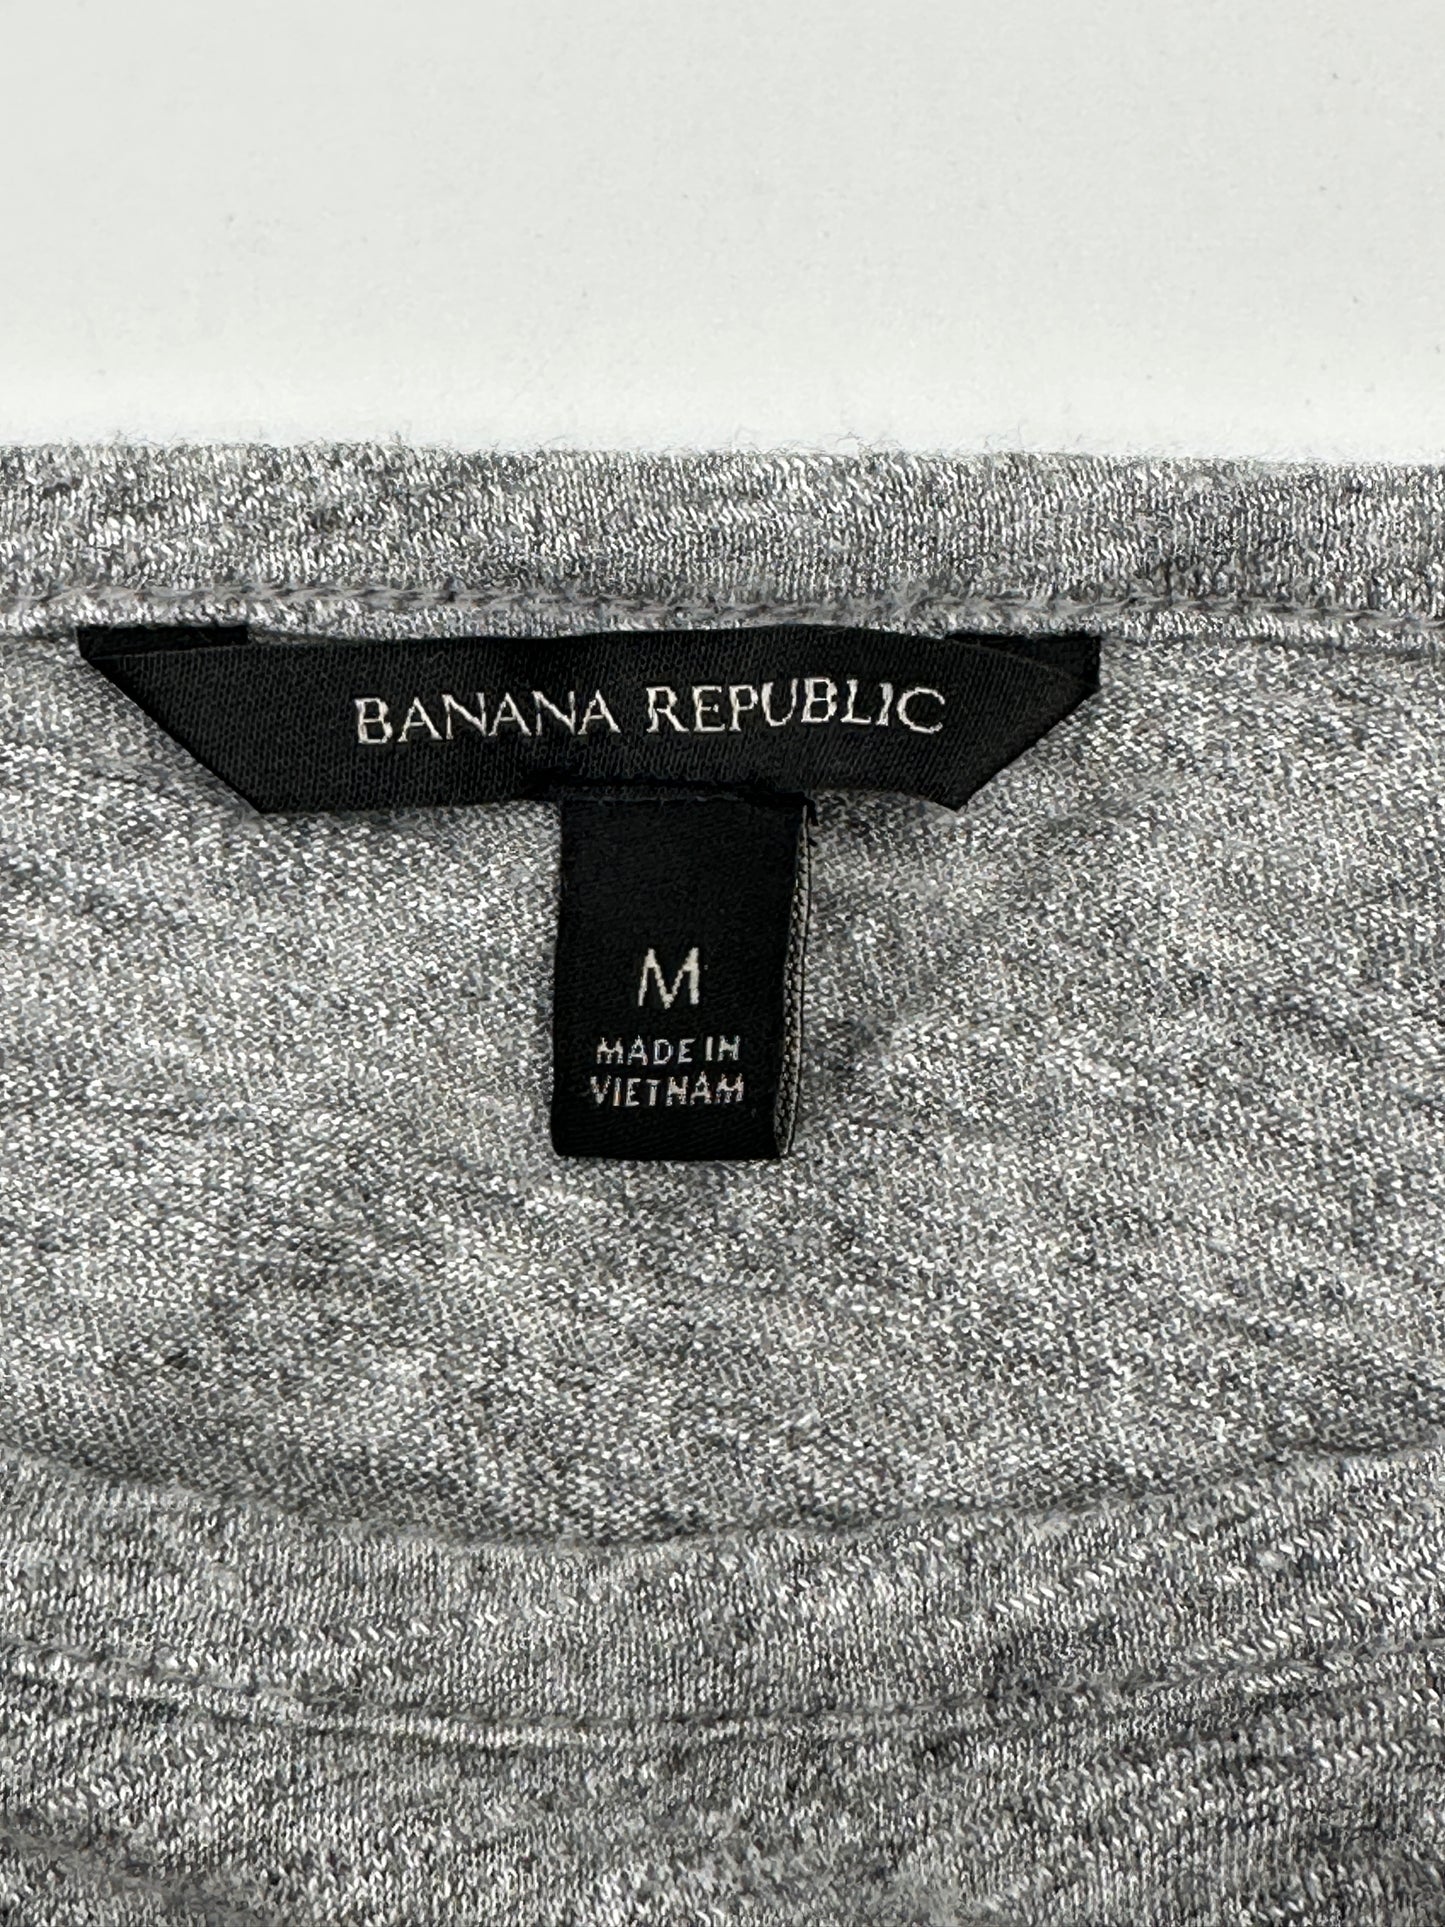 Banana Republic Size M Gray Short Sleeve Tee "Rain, Rain, Go Away" (runs large)